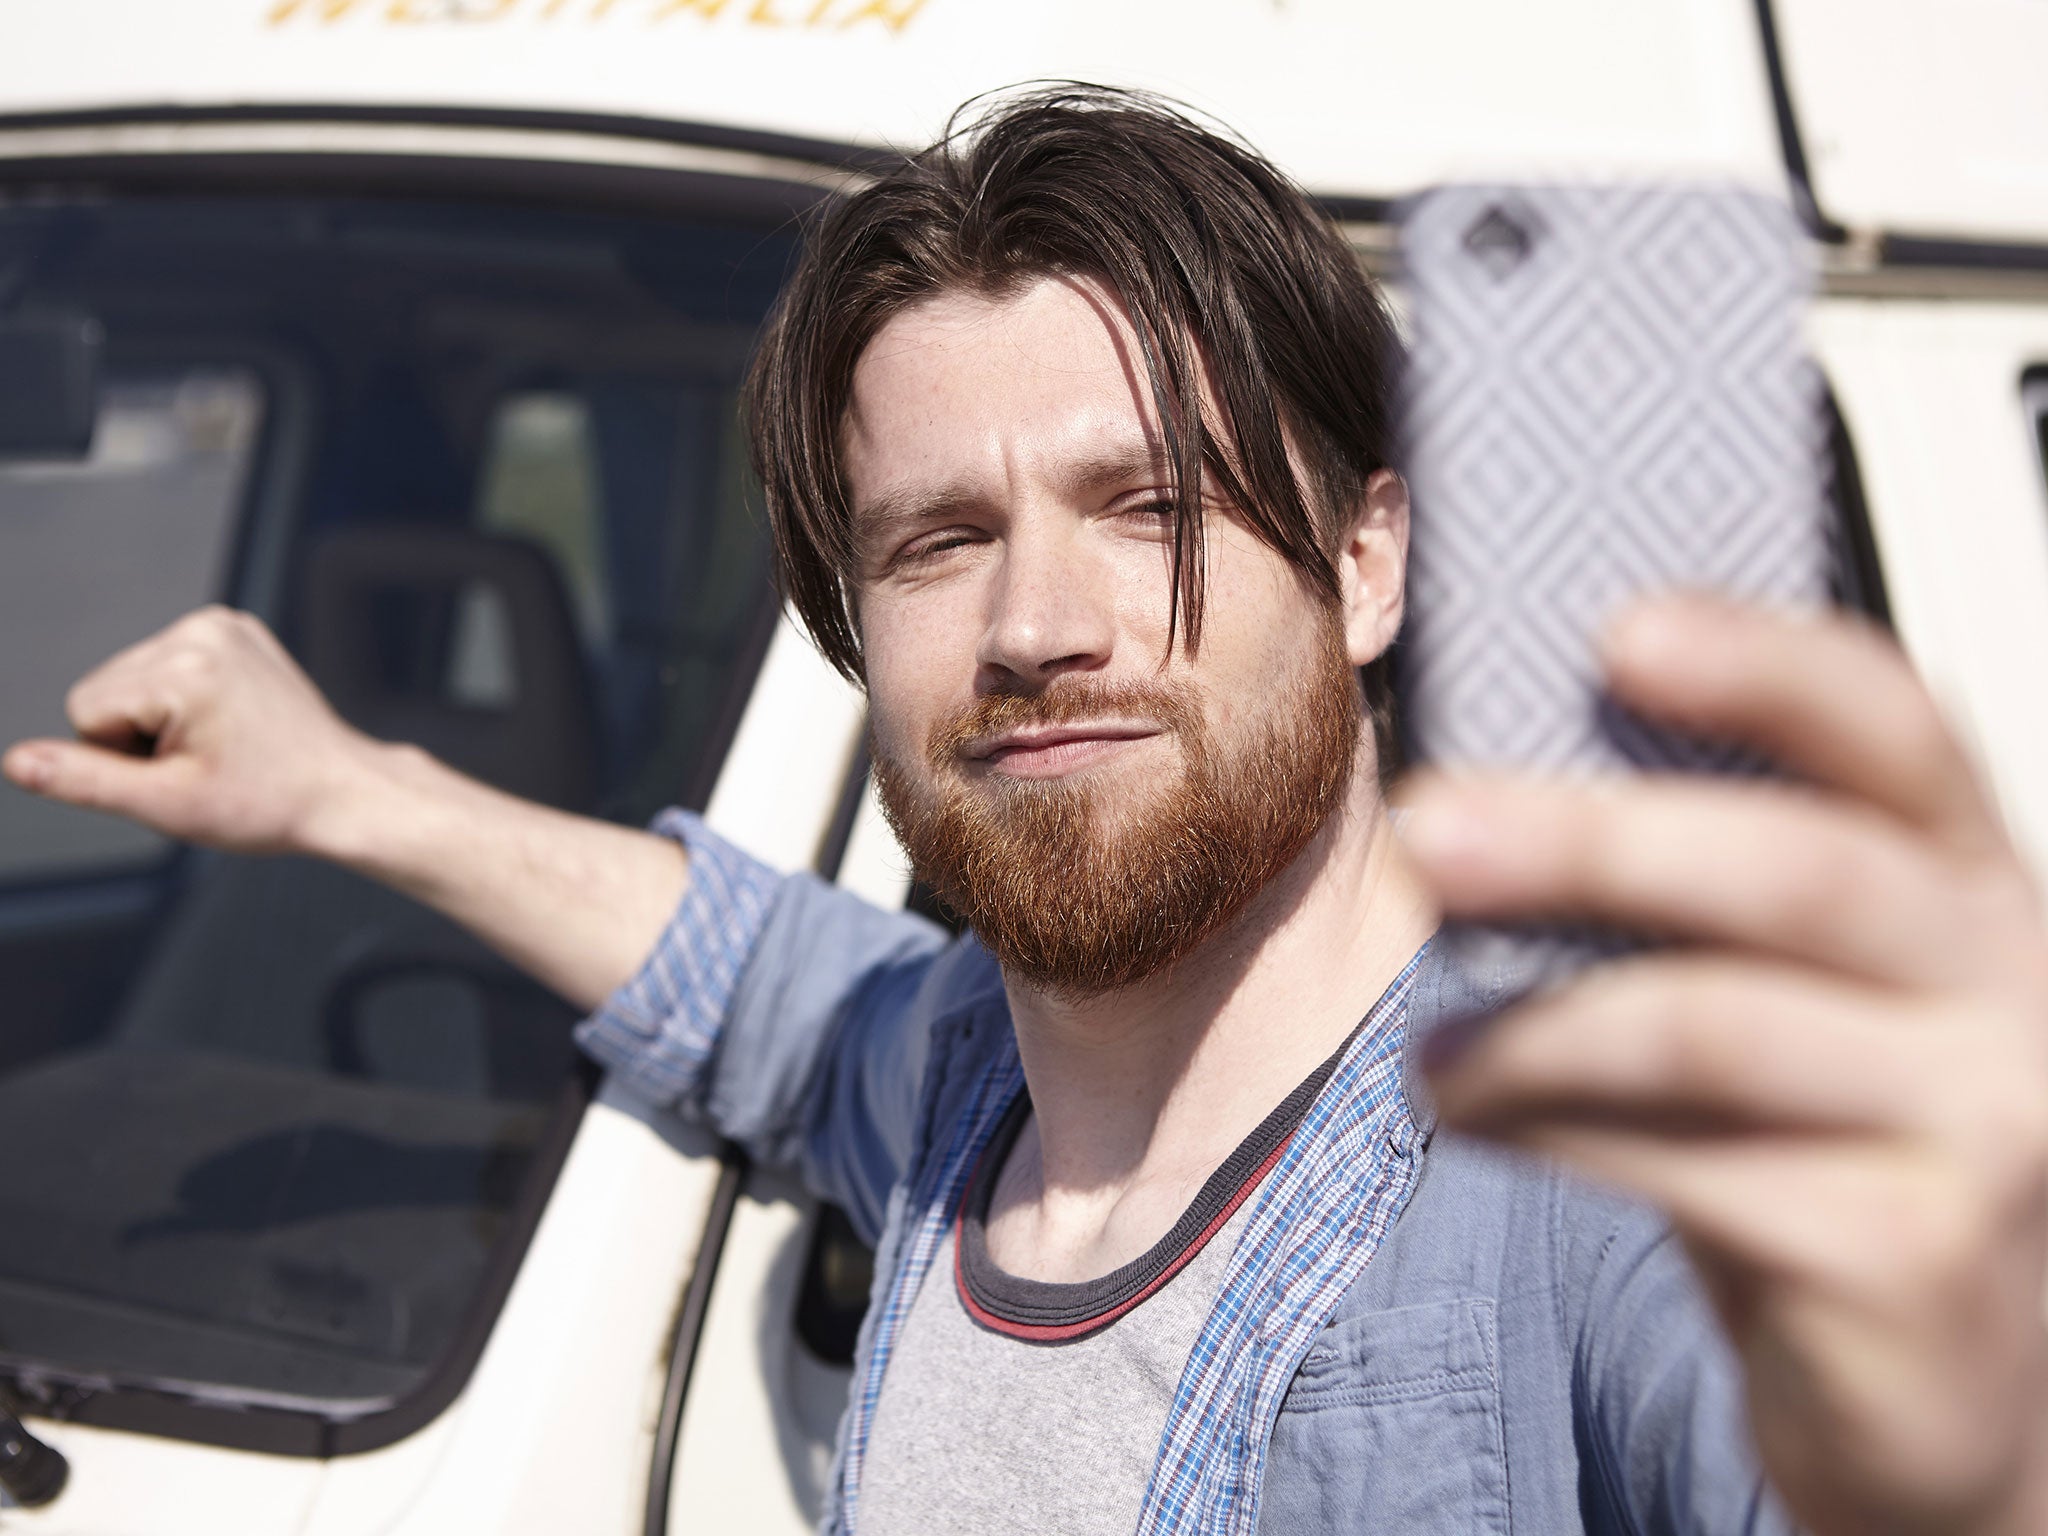 Man taking selfie in front of car